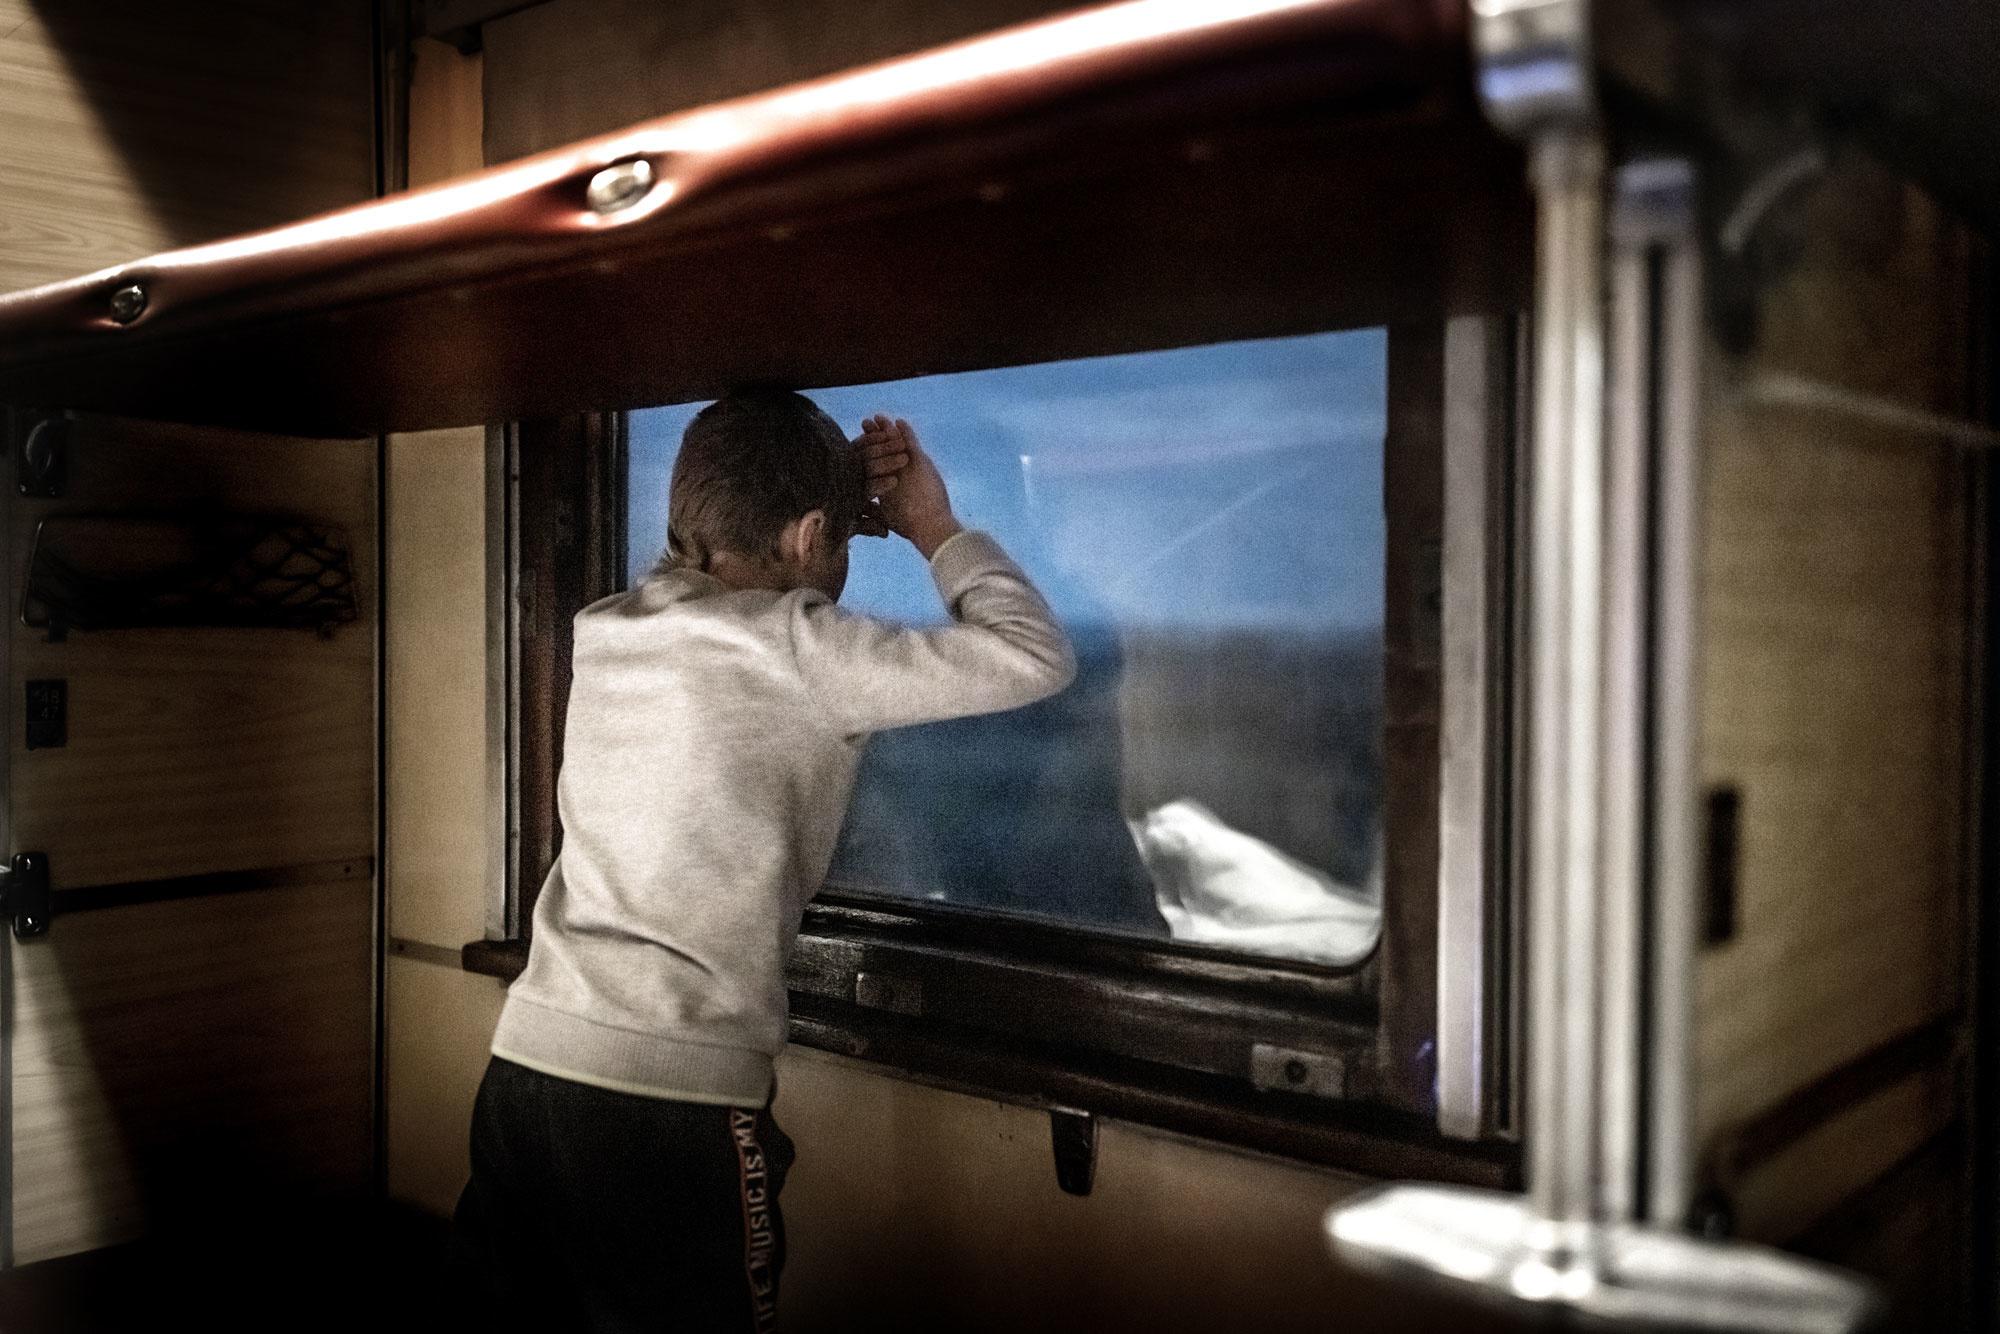 Knack-fotograaf Franky Verdickt in Oekraïne: 'Een trein vol trauma'